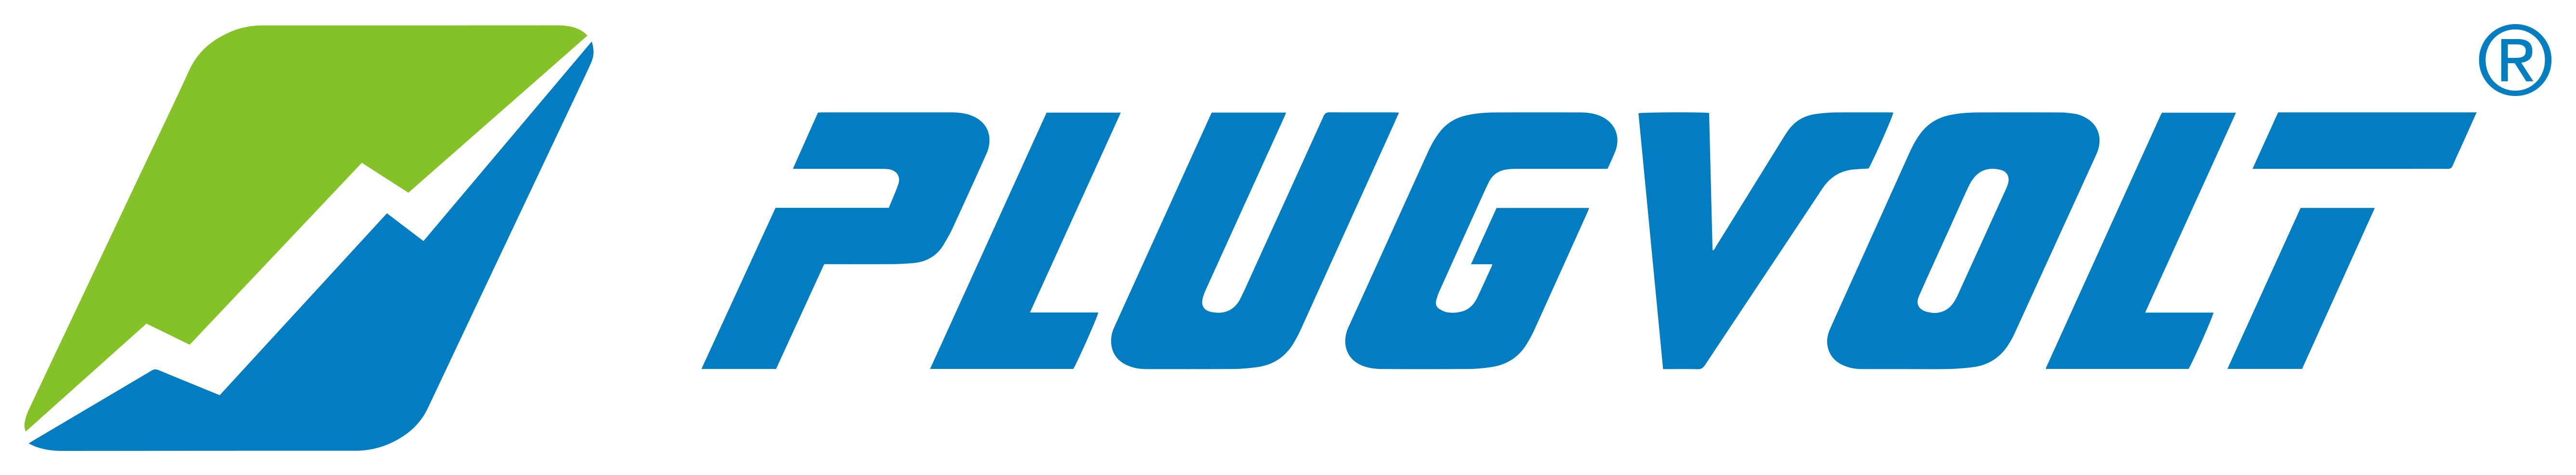 PlugVolt new logo